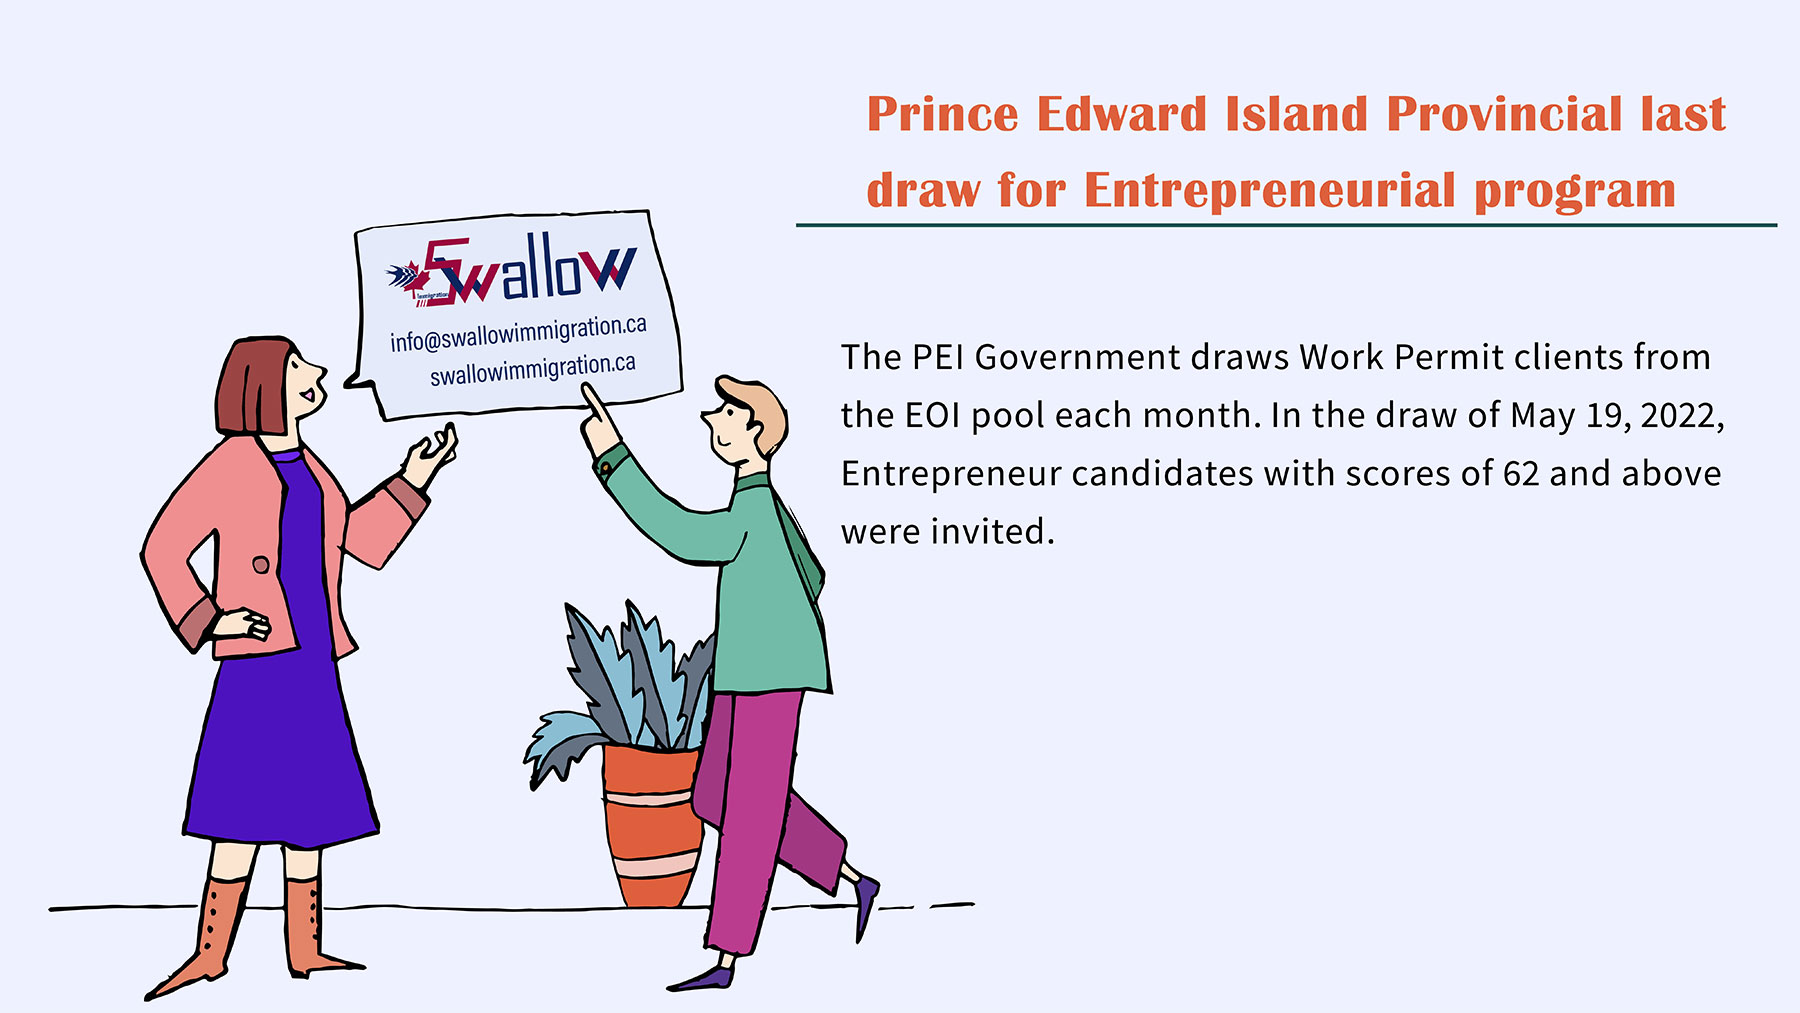 Prince Edward Island Provincial last draw for Entrepreneurial program